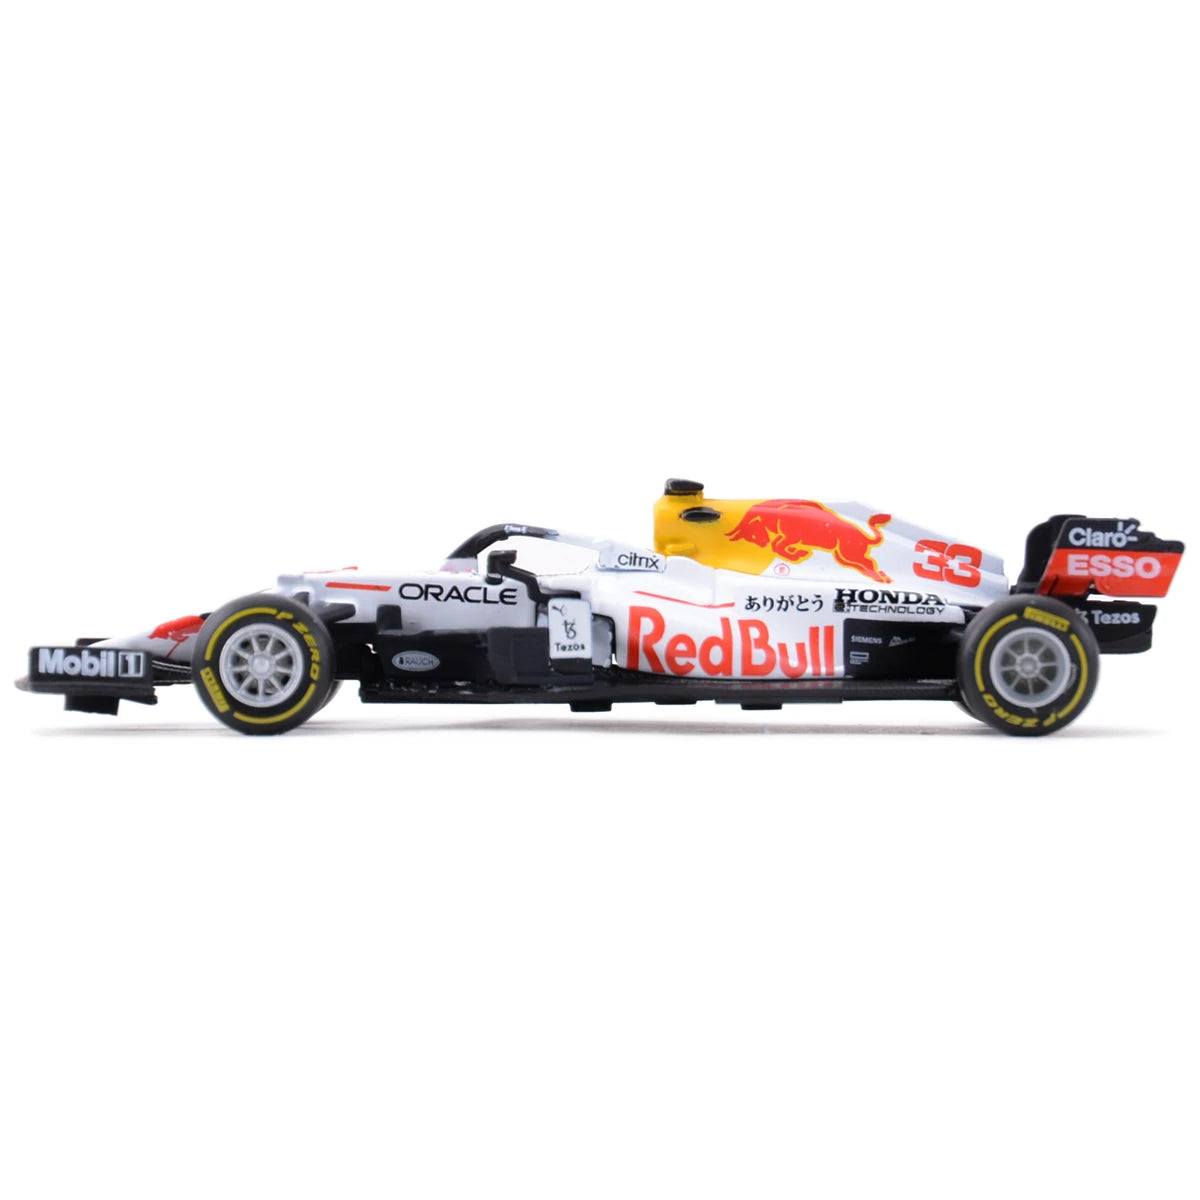 Bburago 1:43 2021 Red Bull RB16B #33 Turkey F1 Formula Car Static Die Cast Vehicles Collectible Model Racing Car Toys